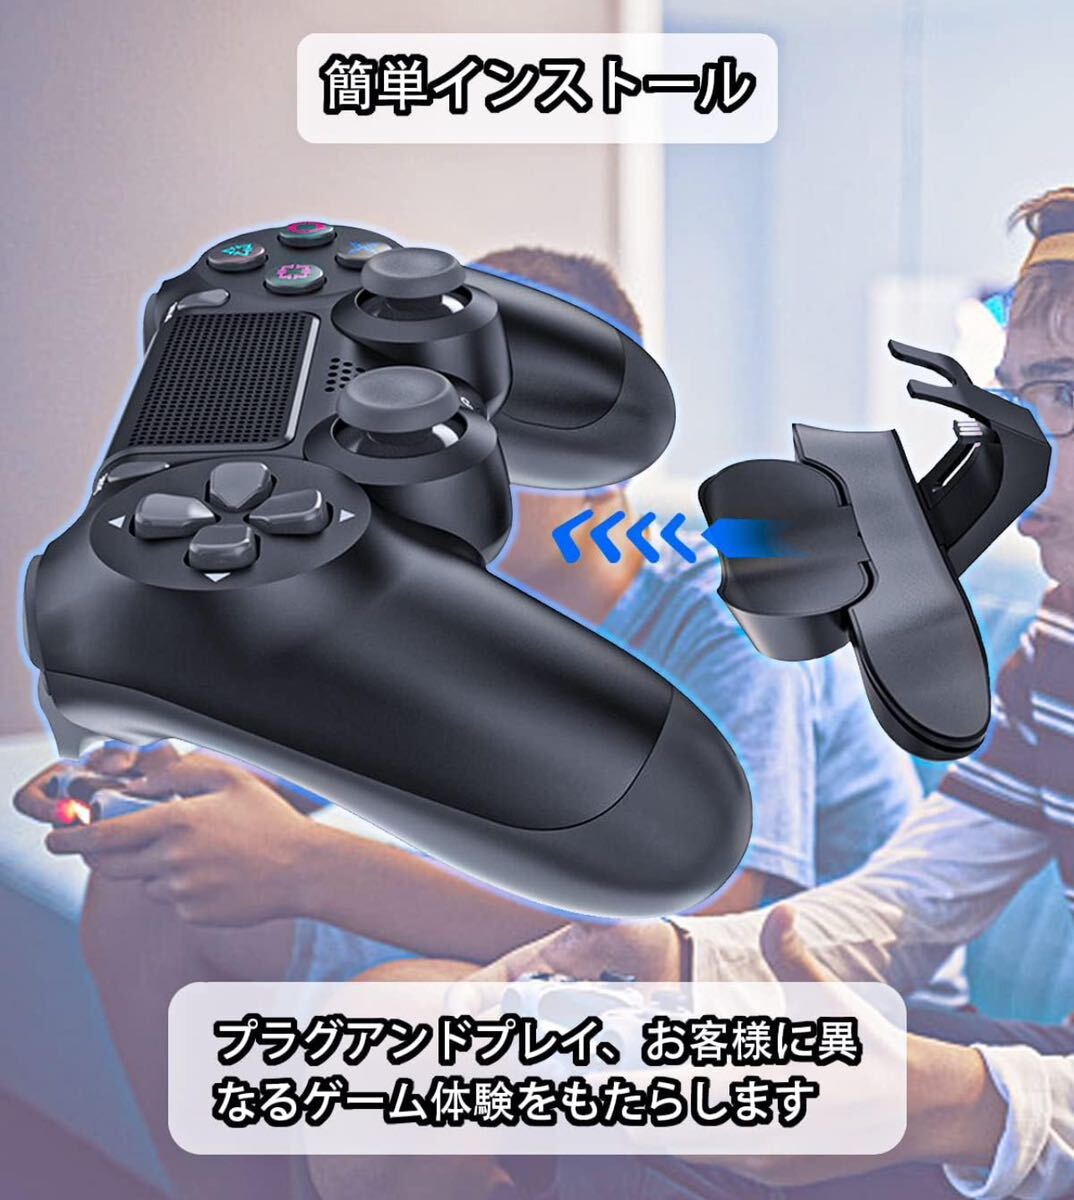 PS4 コントローラー用 背面パドル ブラック 簡単設定 リコイル制御 連射 ターボ 機能ボタンのマッピング 日本語取扱説明書